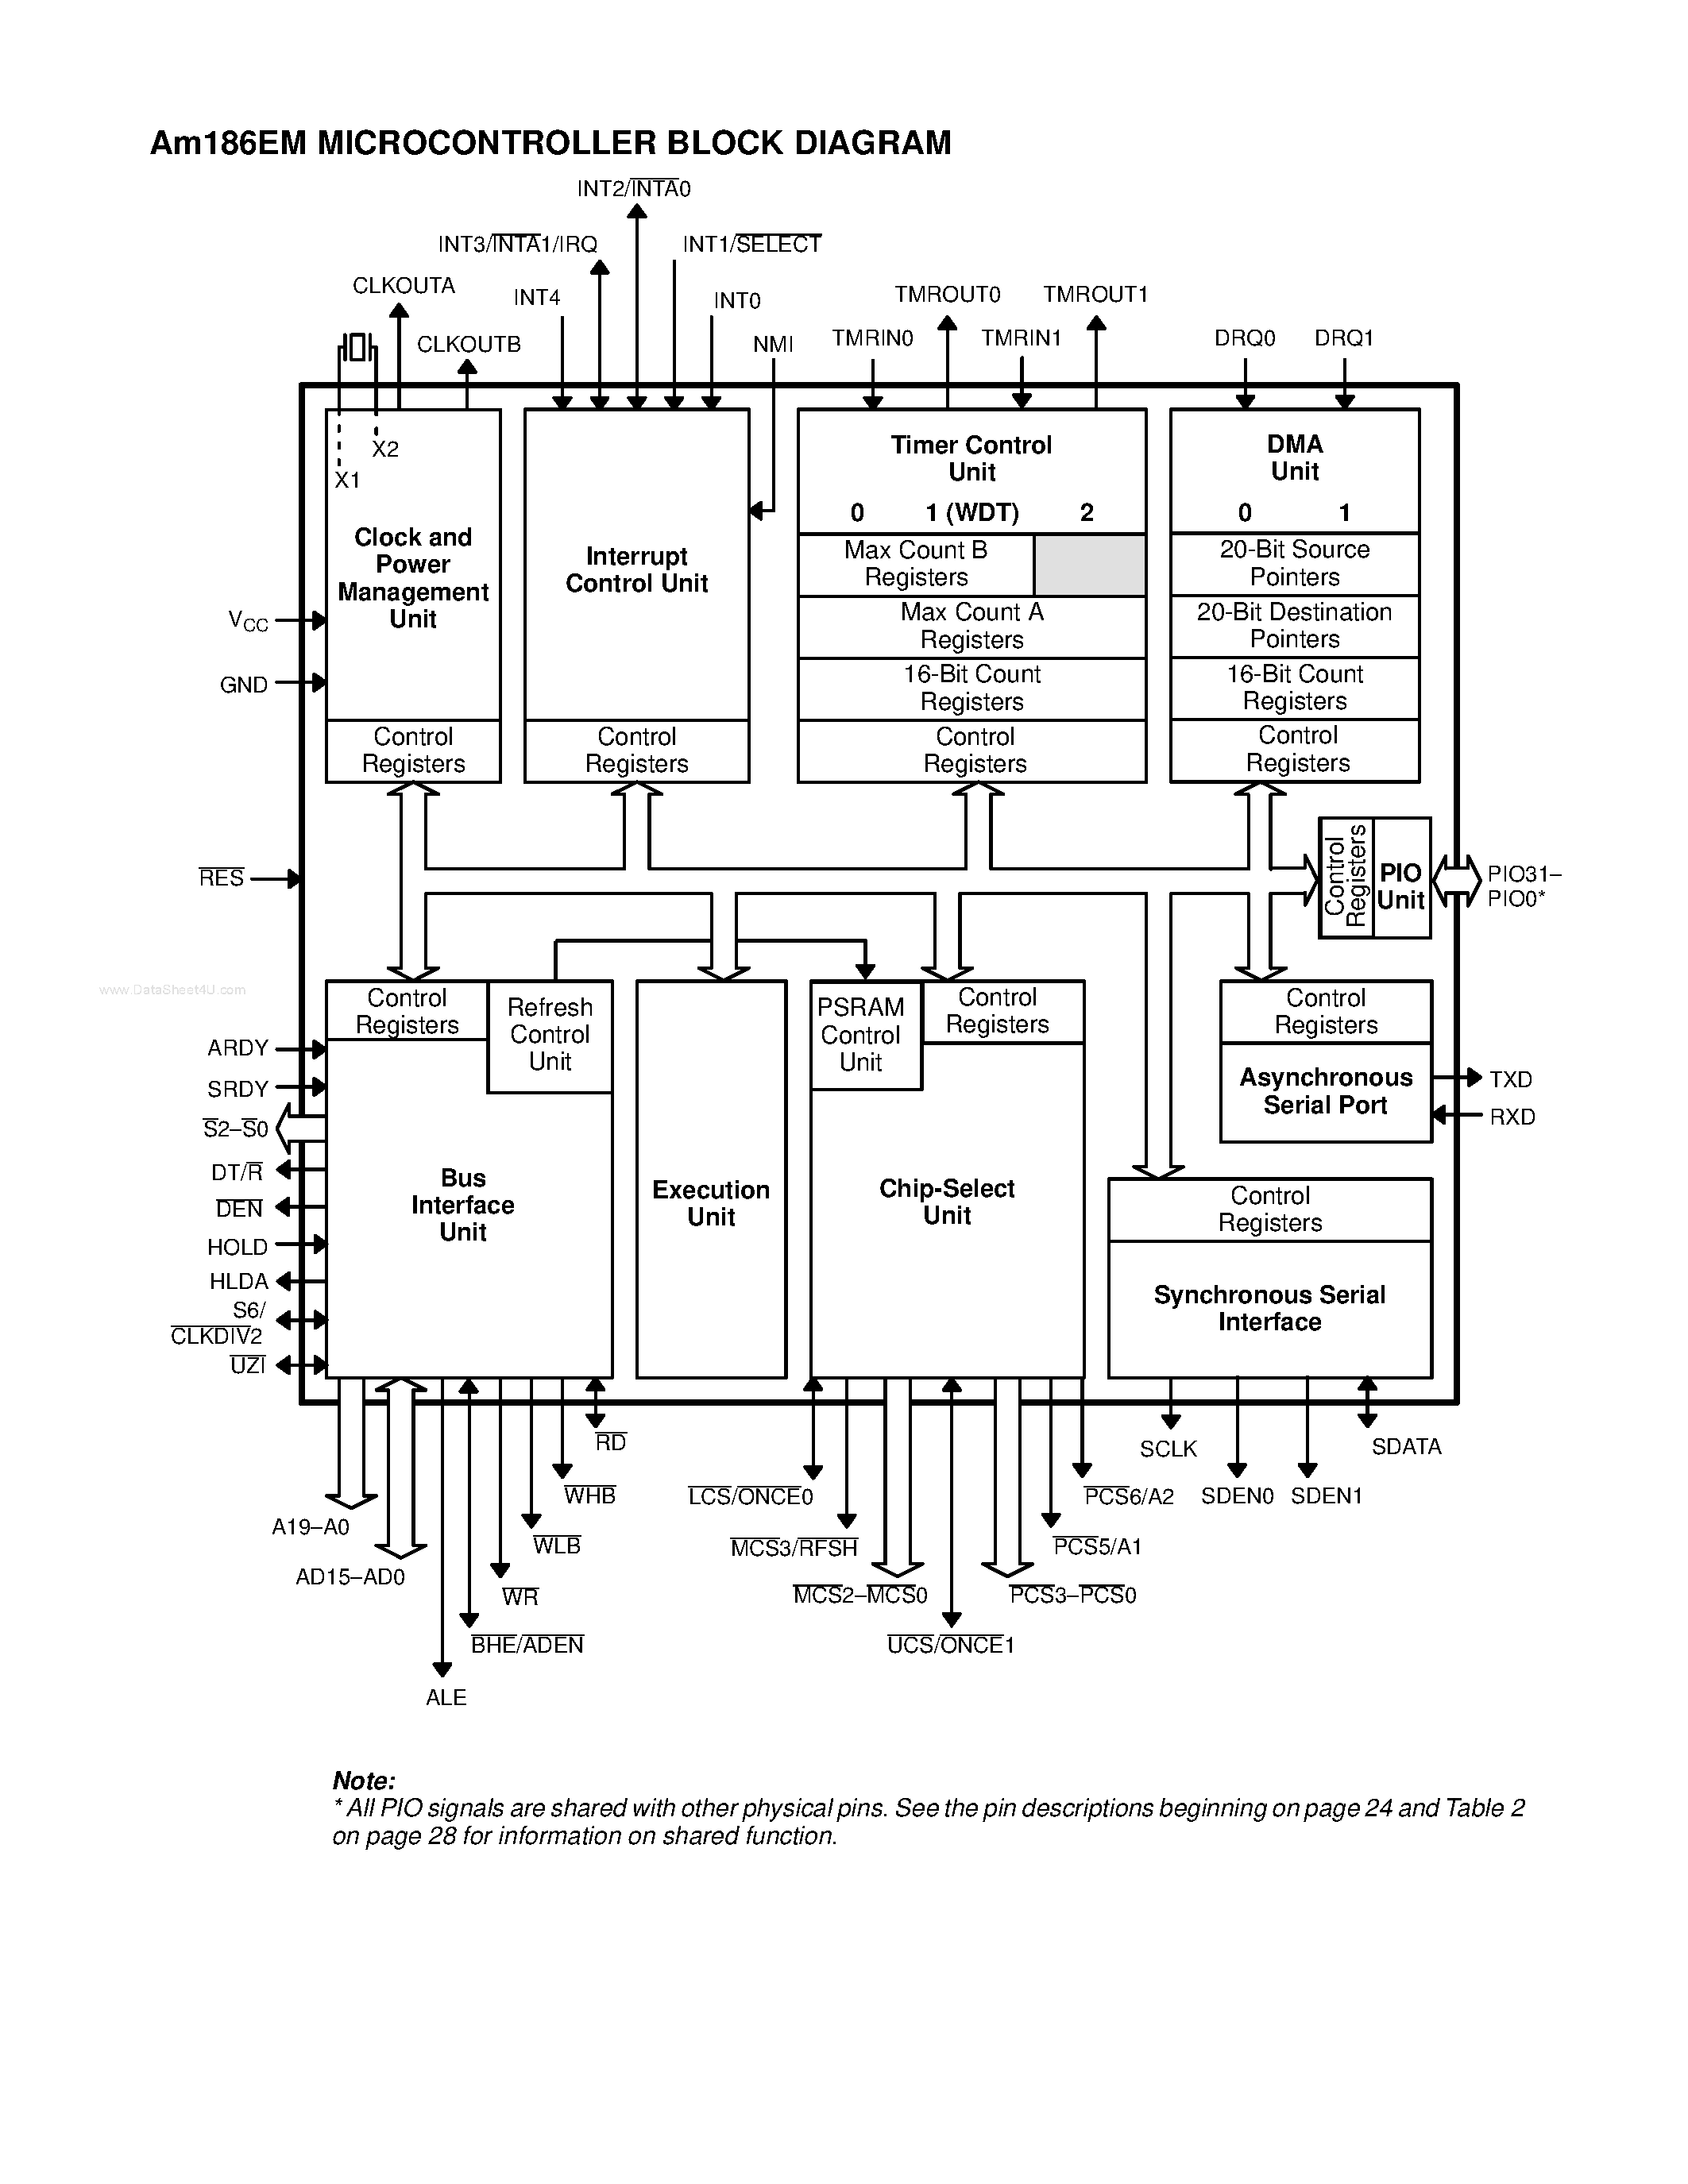 Datasheet AM186EM - MICROCONTROLLER BLOCK DIAGRAM page 1